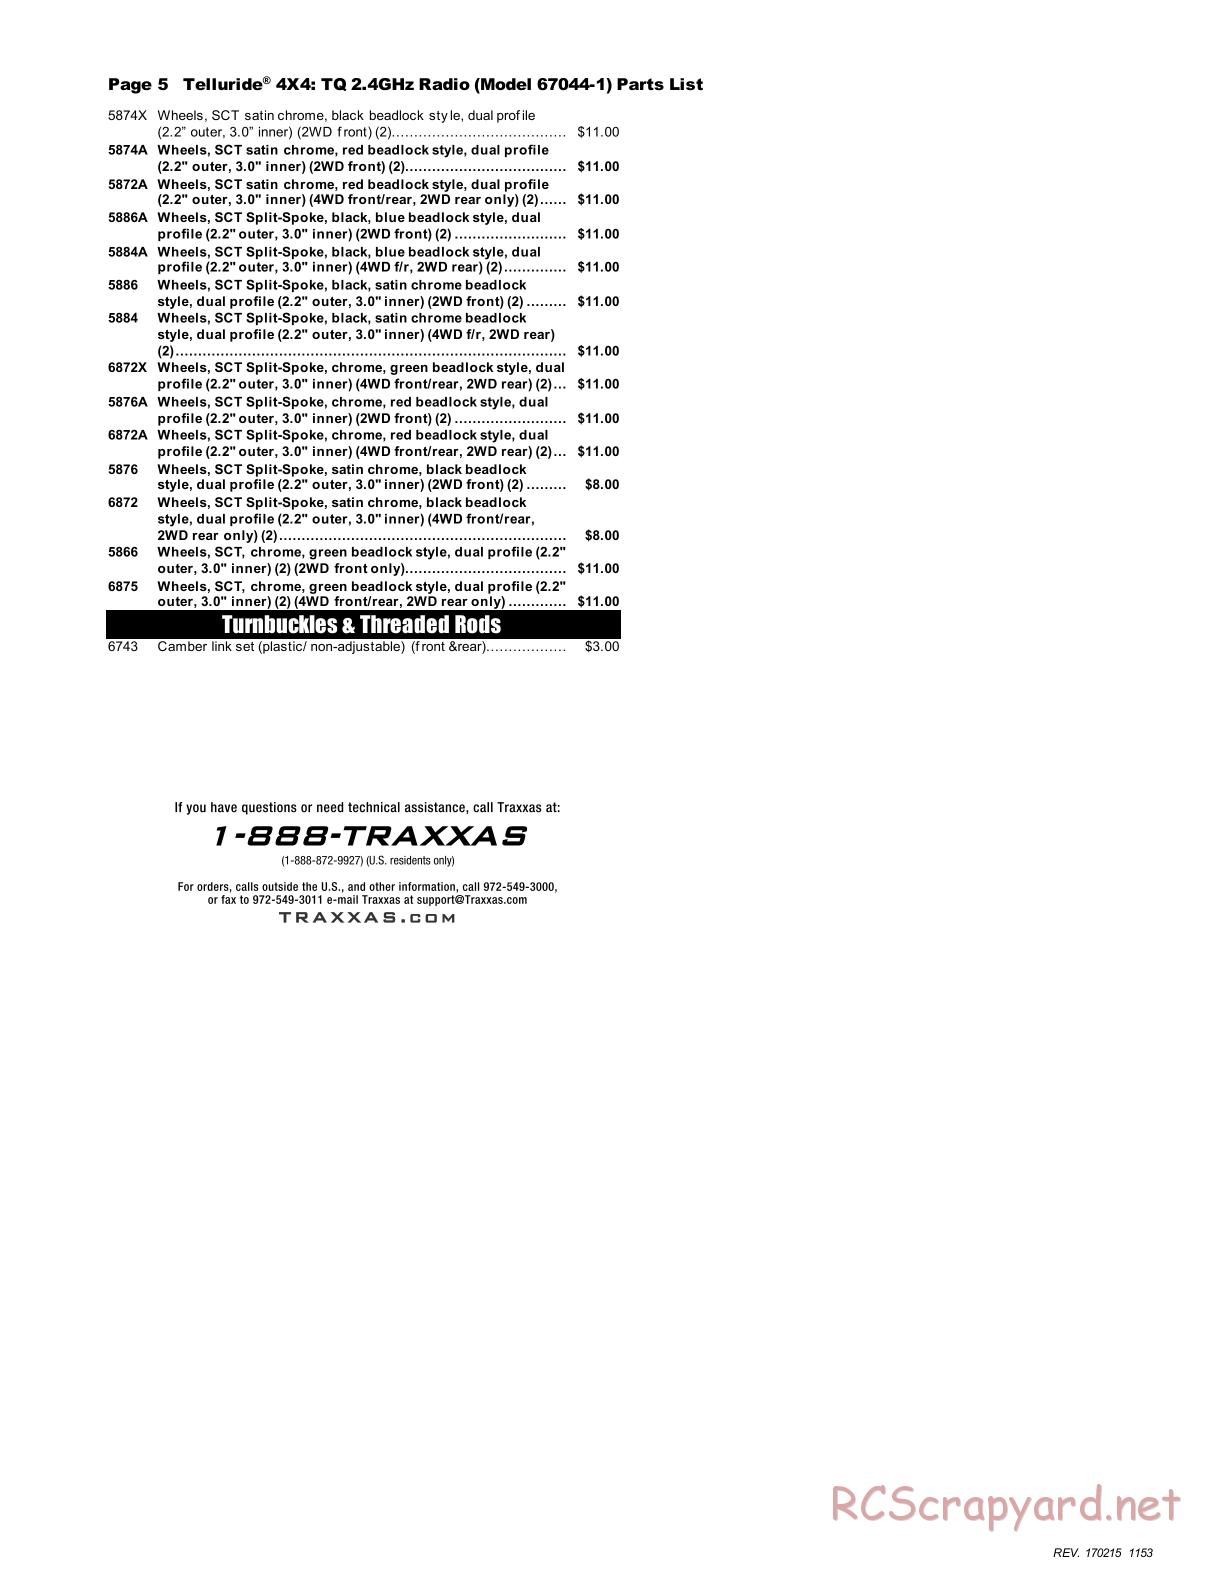 Traxxas - Telluride 4x4 (2015) - Parts List - Page 5